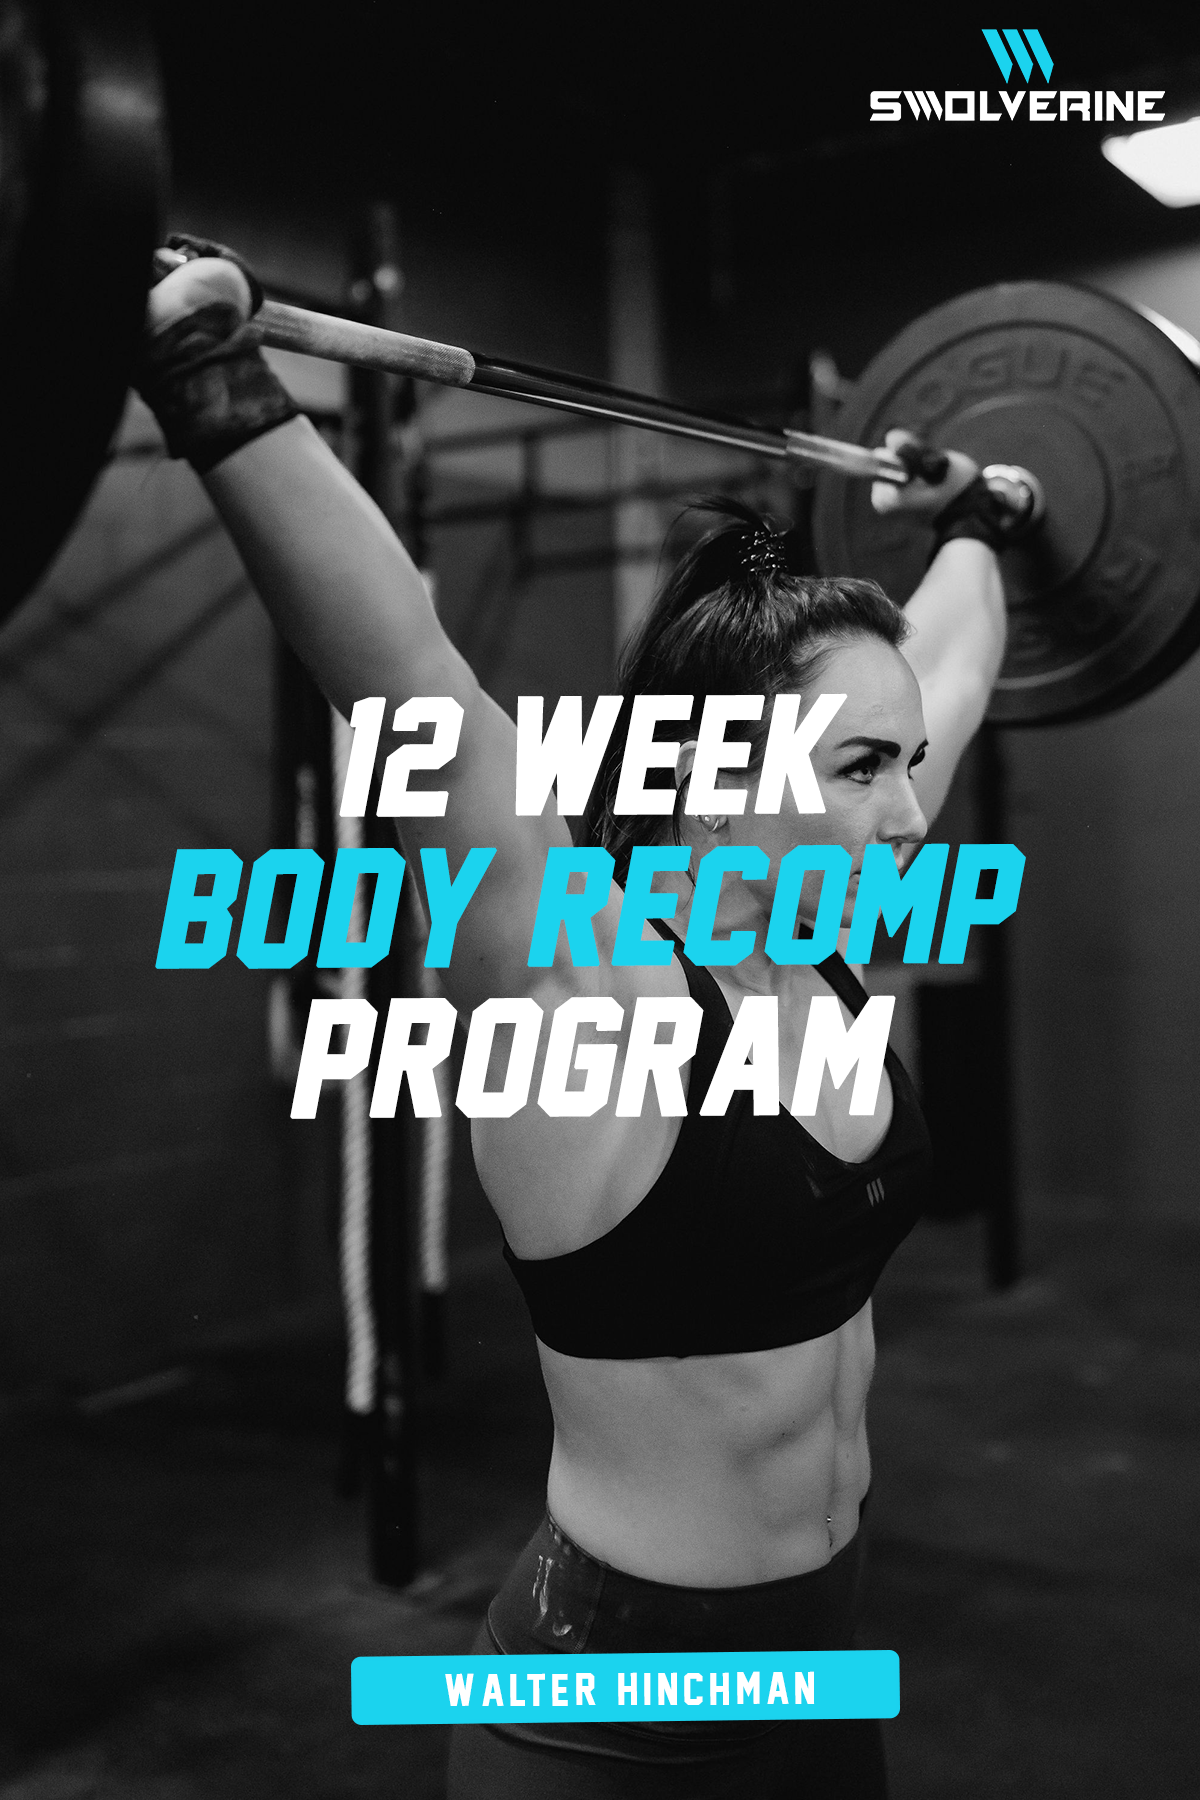 12 Week Total Body Recomp Program